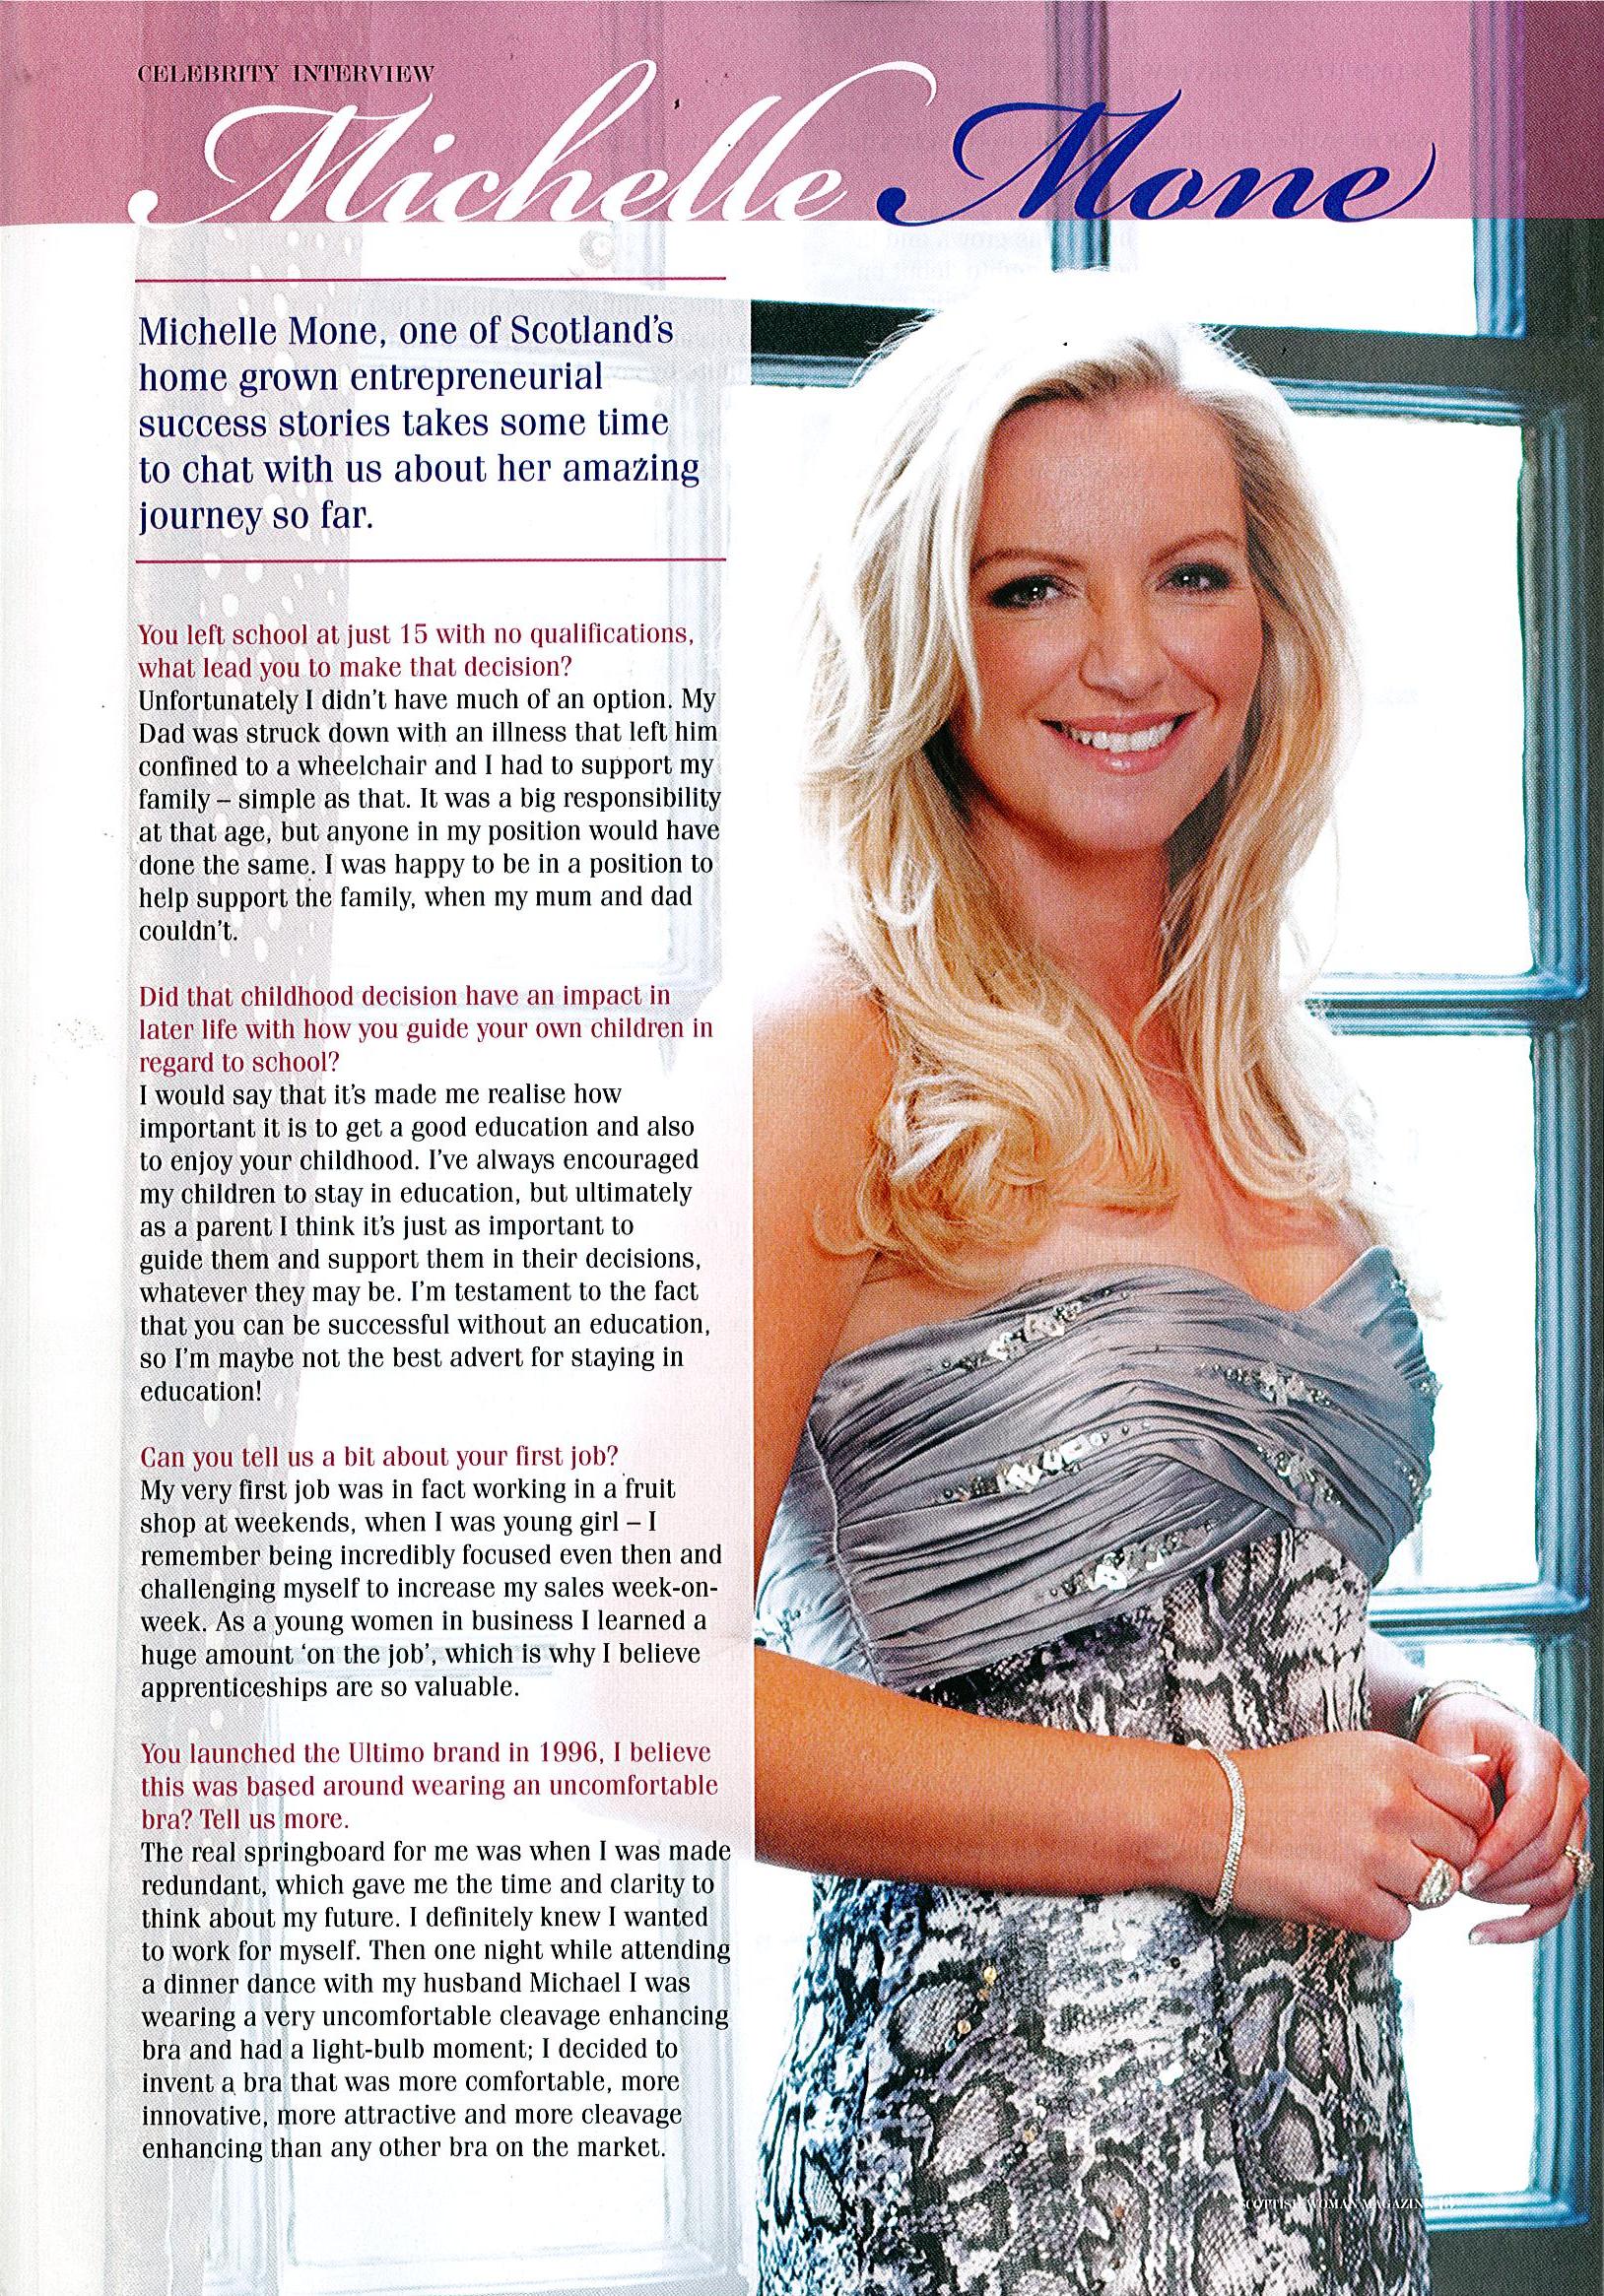 Scottish-Women-Magazine_Michelle-Mone-May-June-Issue-Page1